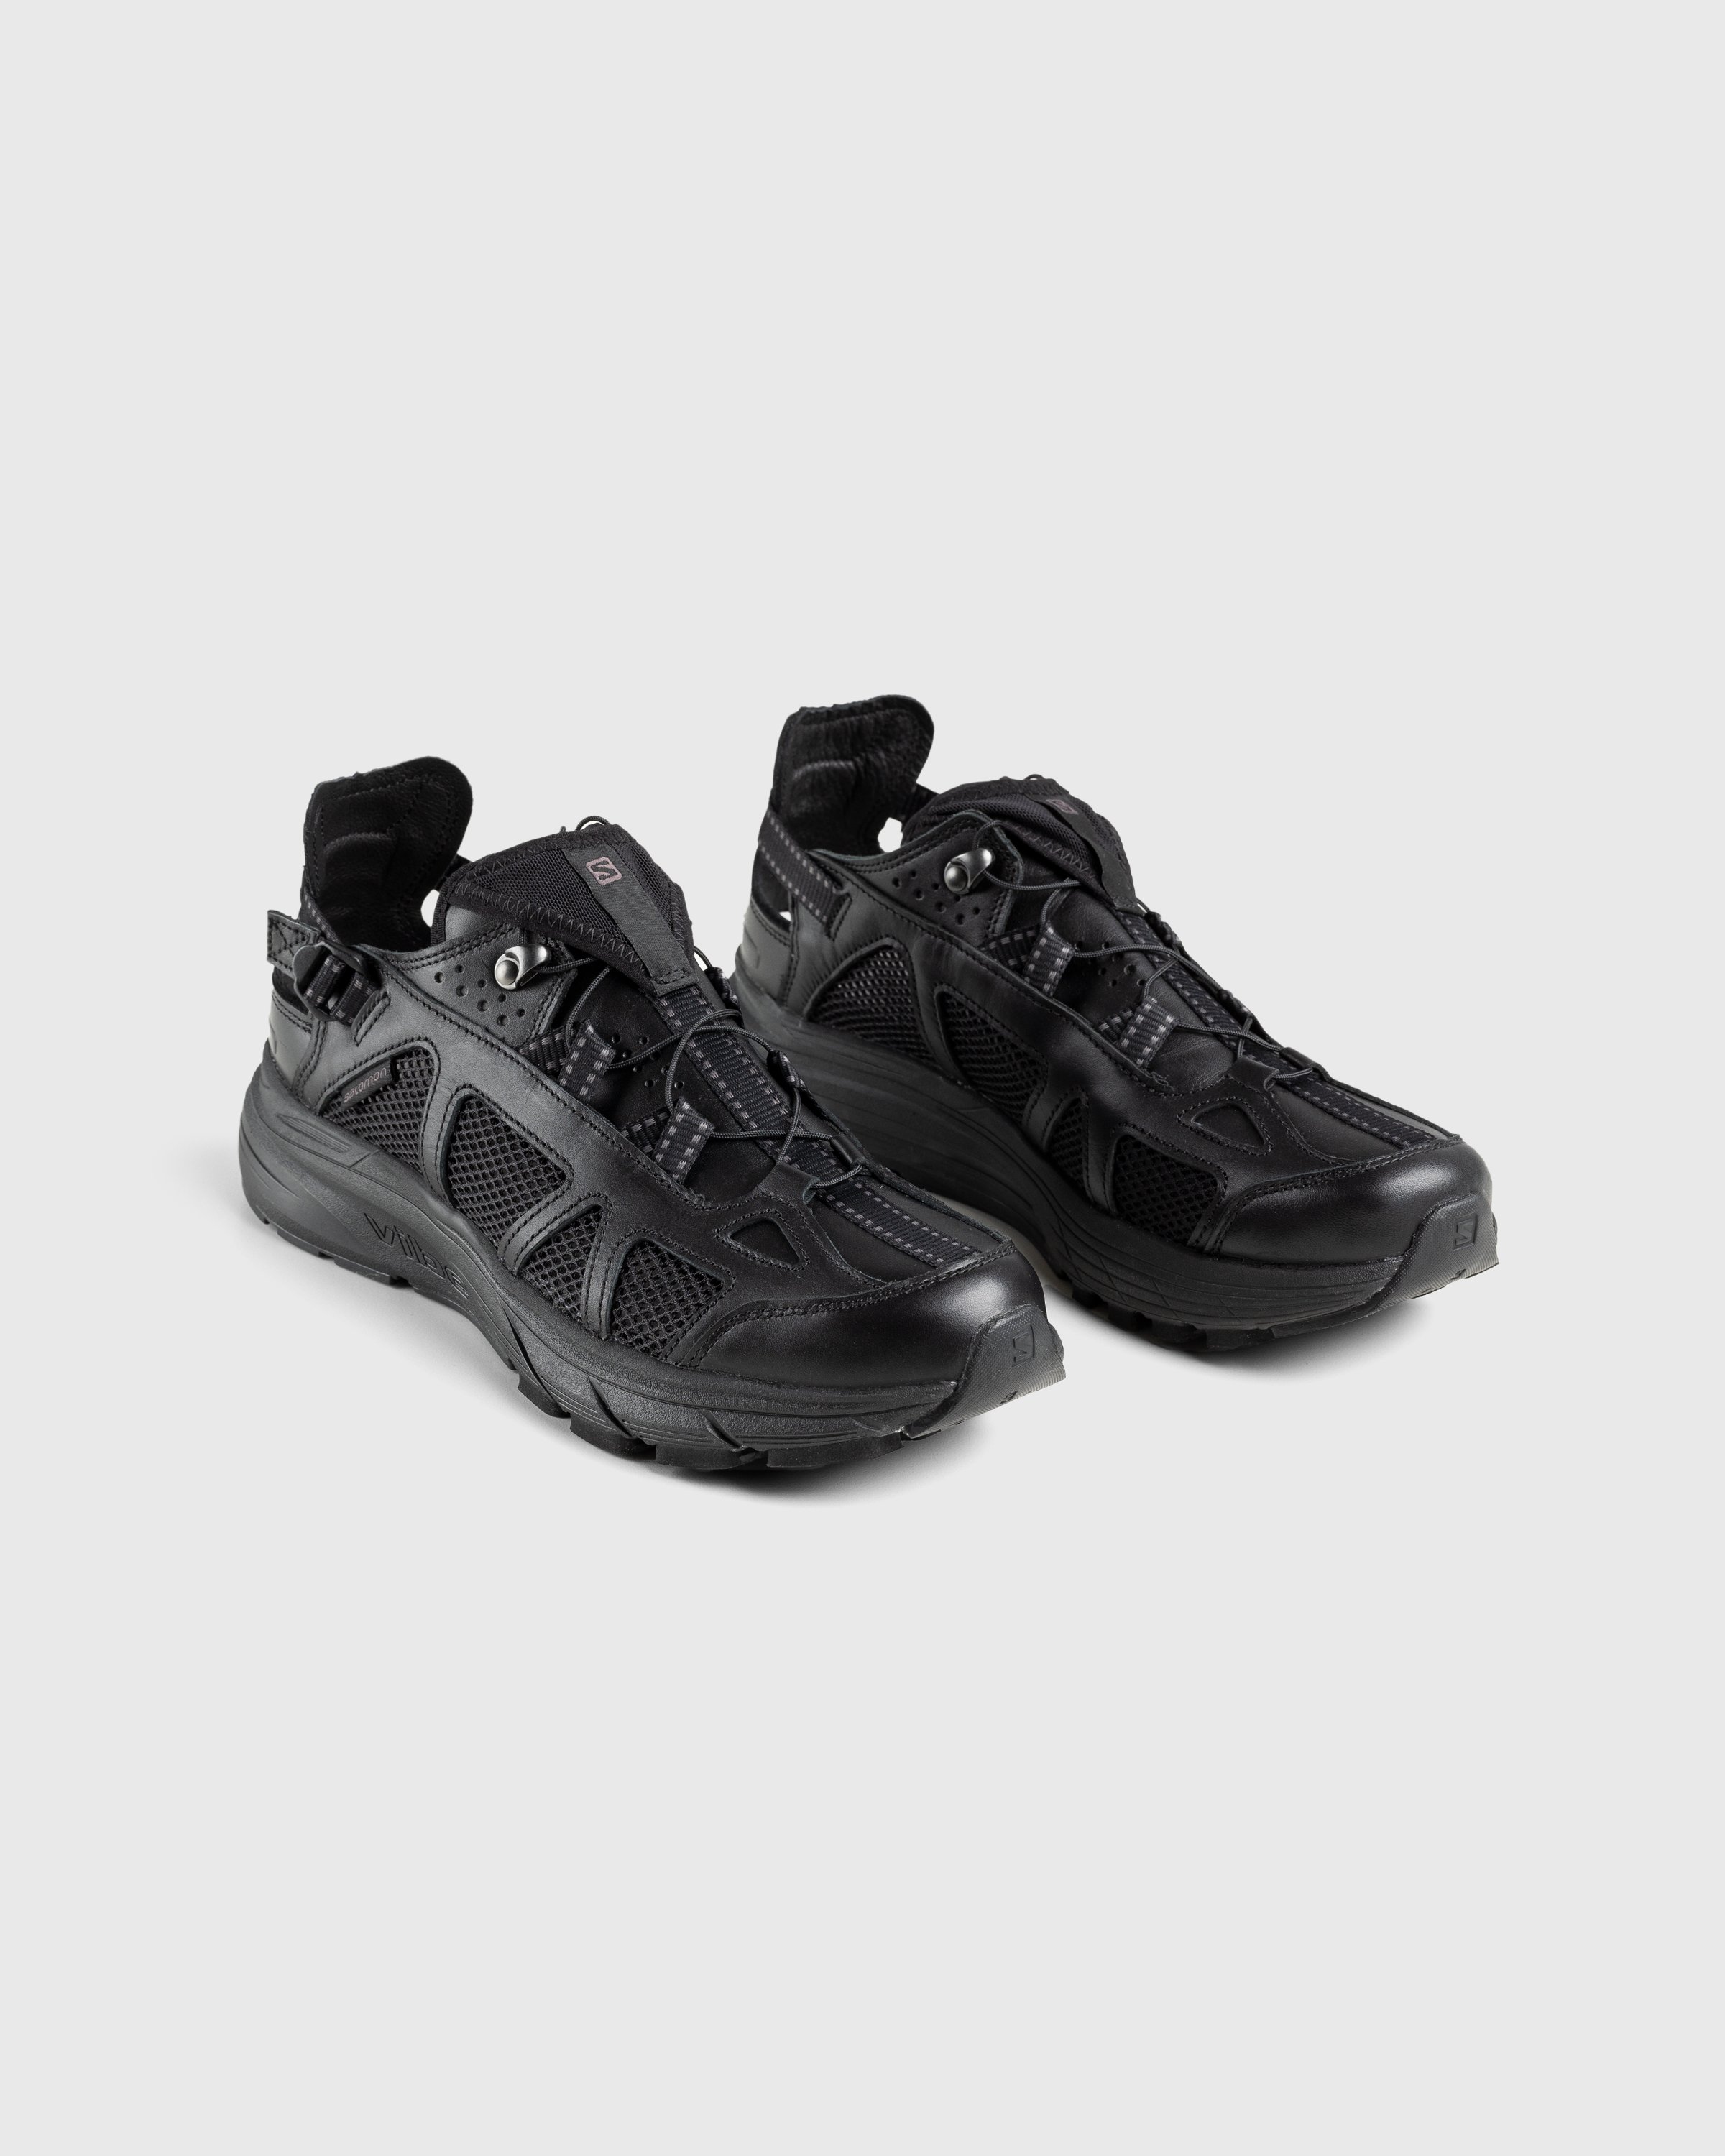 Salomon - Techsonic Leather Advanced Black/Black/Magnet - Footwear - Black - Image 4